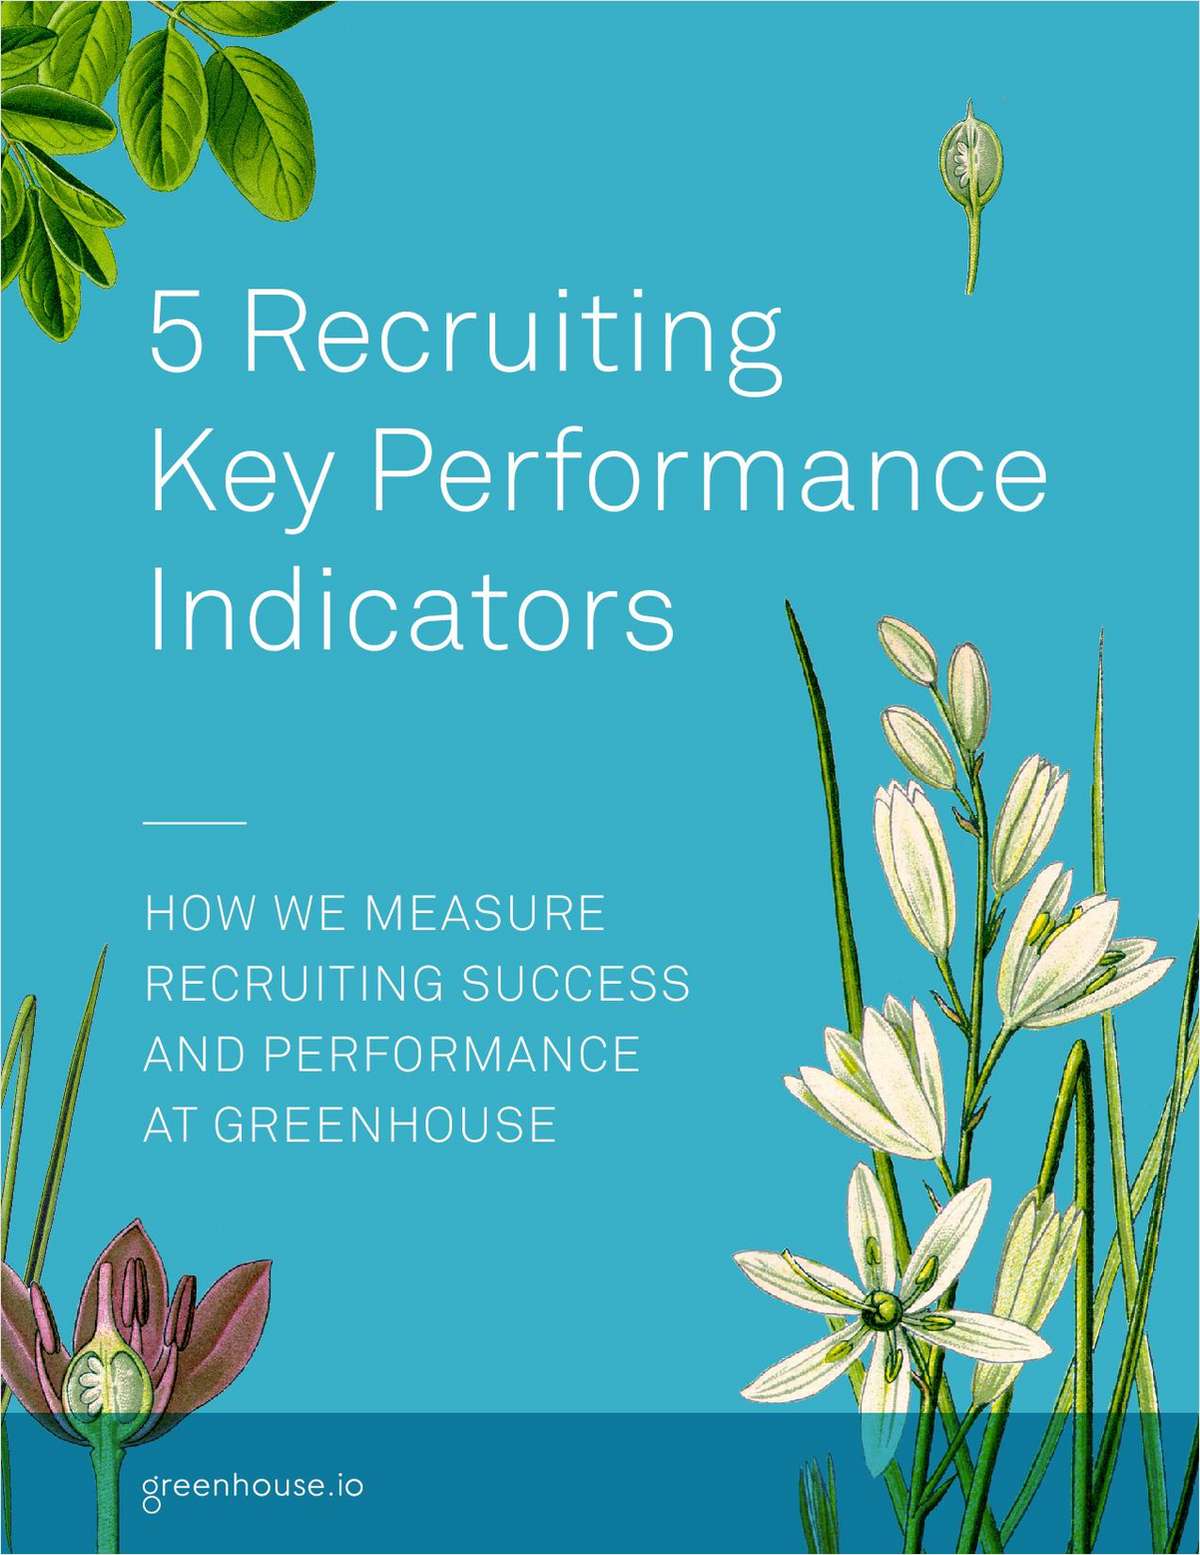 5 Recruiting Key Performance Indicators